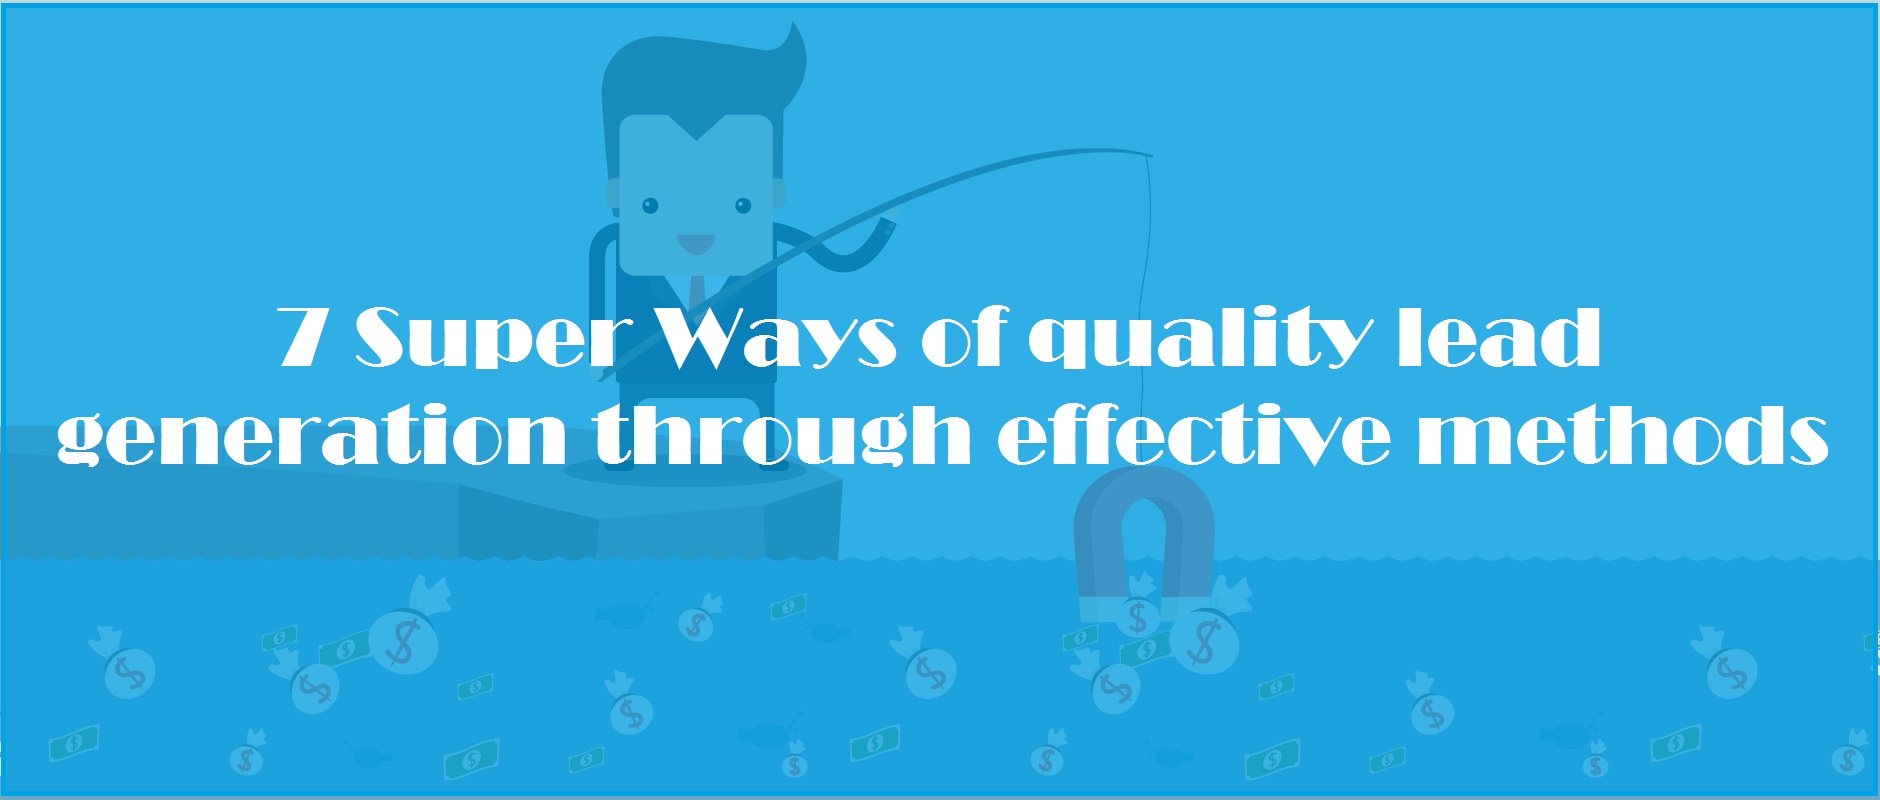 7 Super Ways of quality lead generation through effective methods-